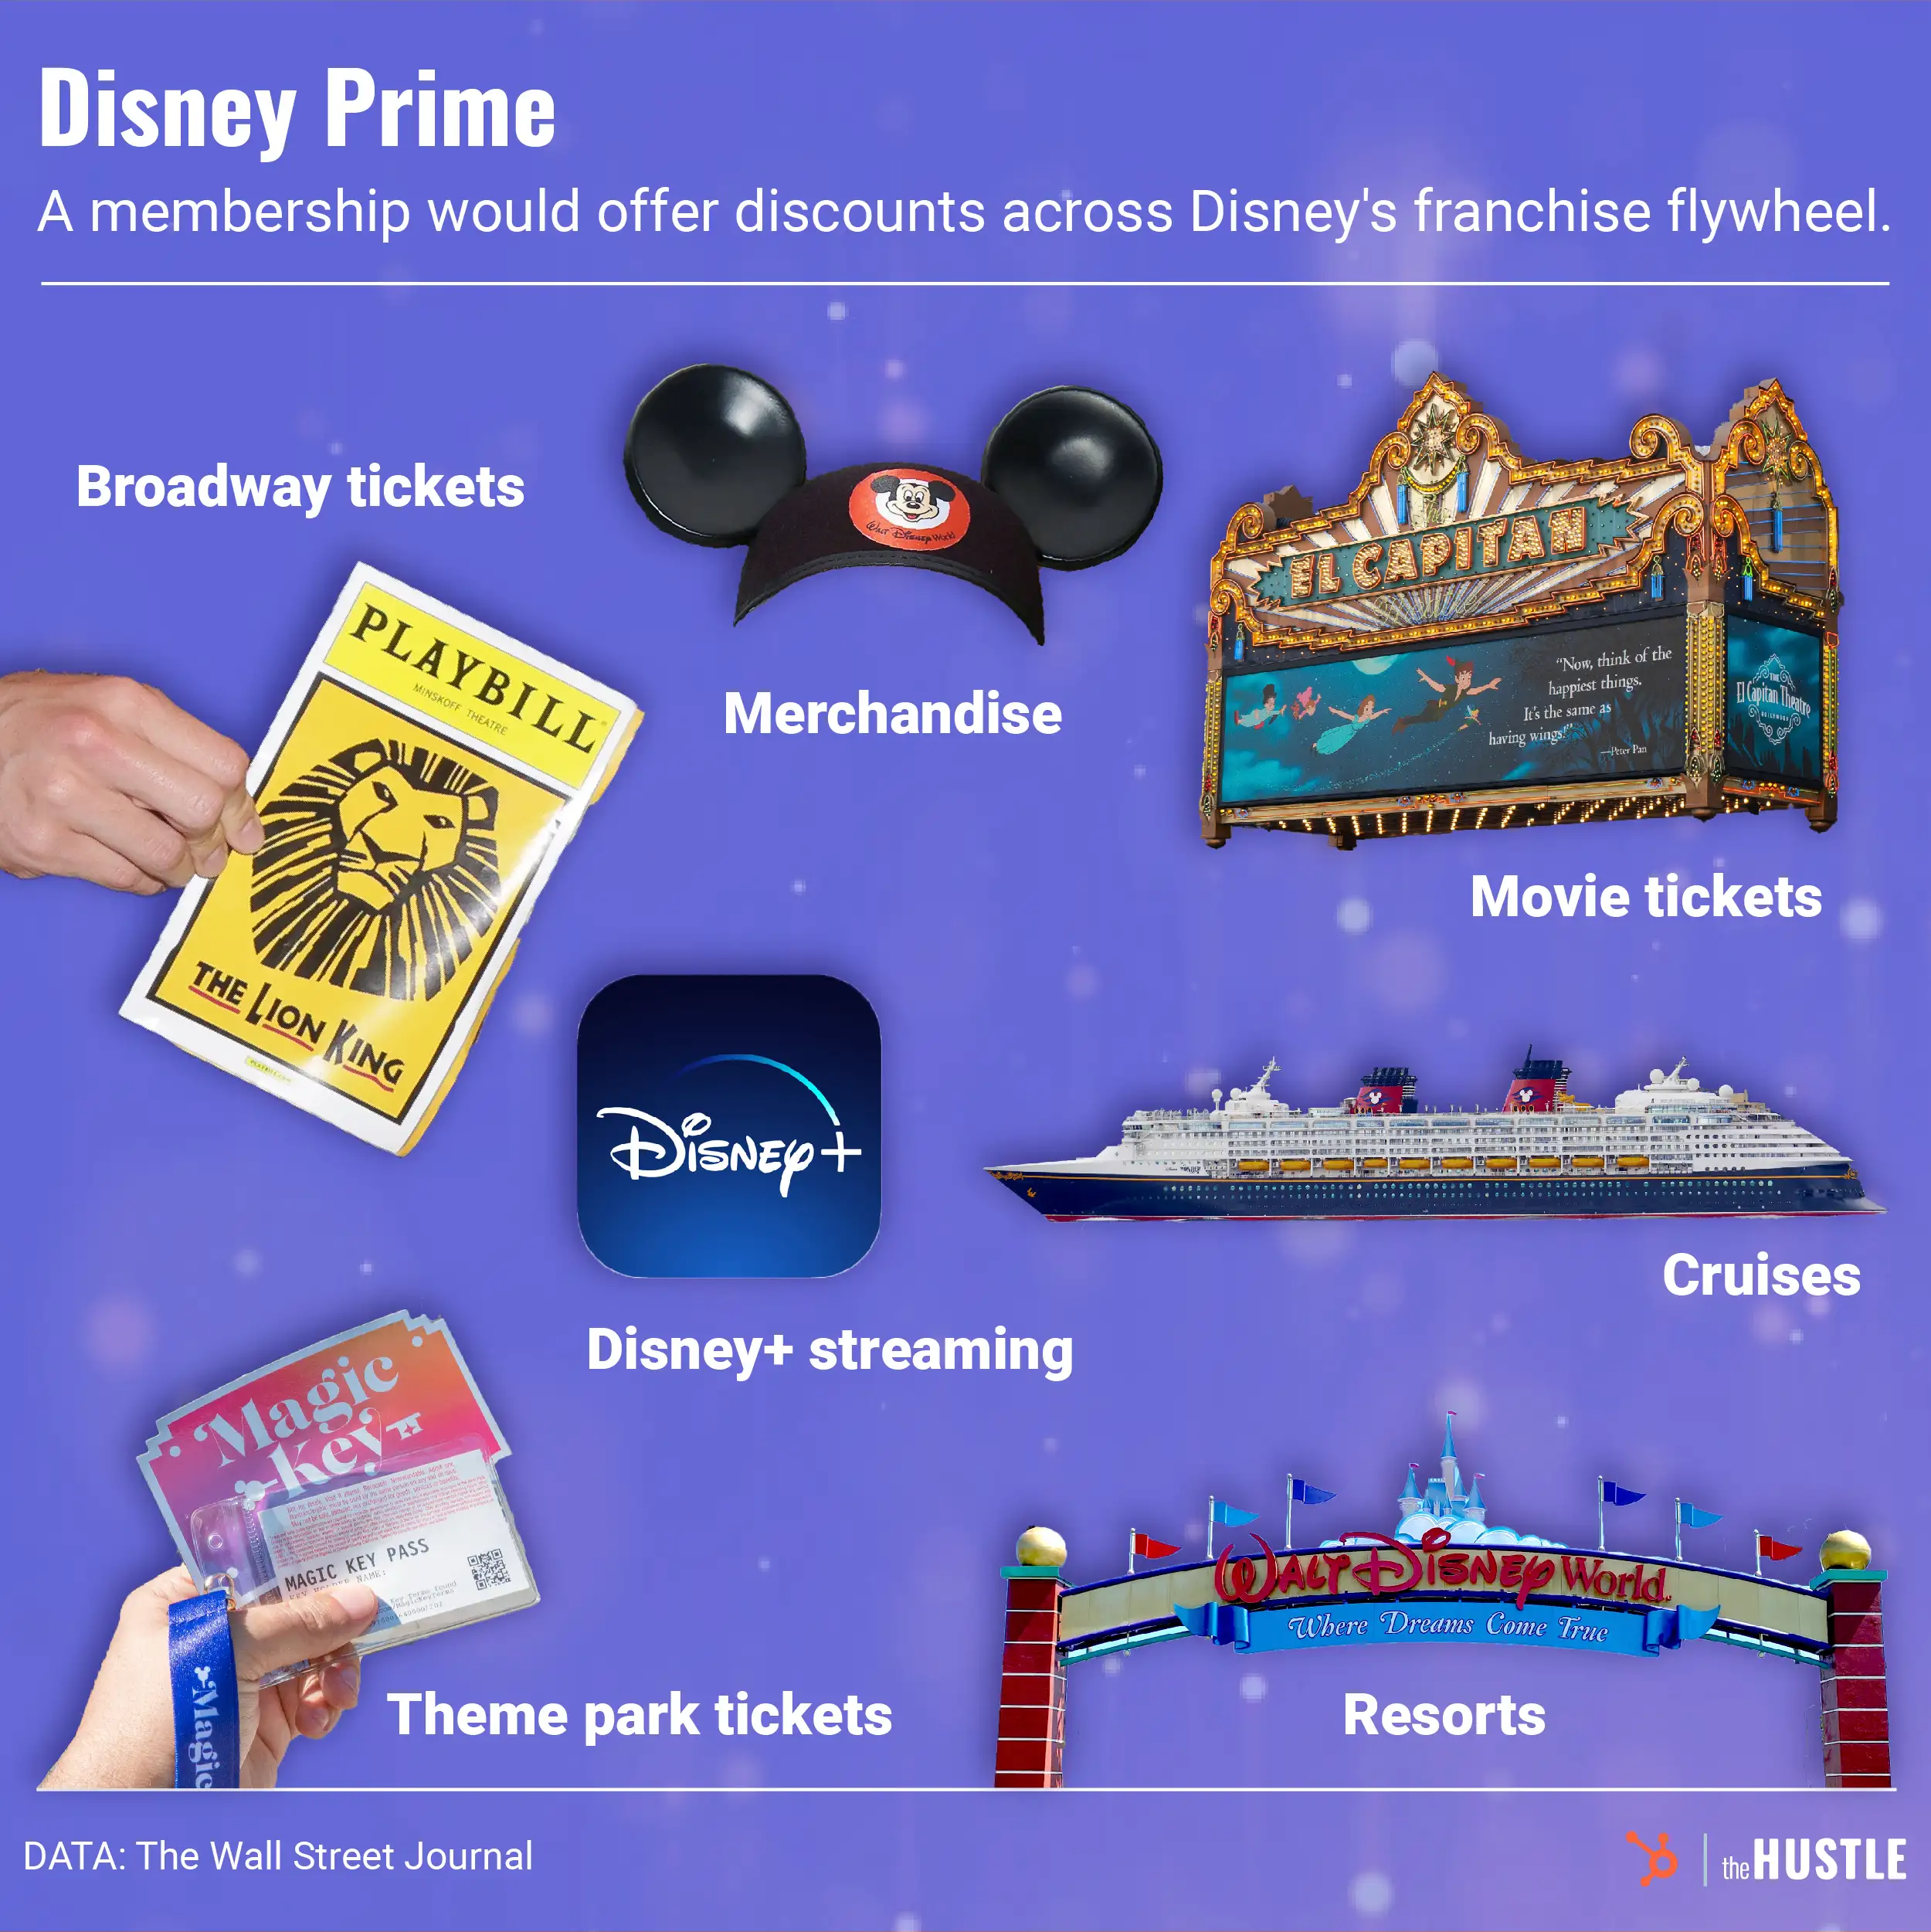 Disney’s planning a new membership